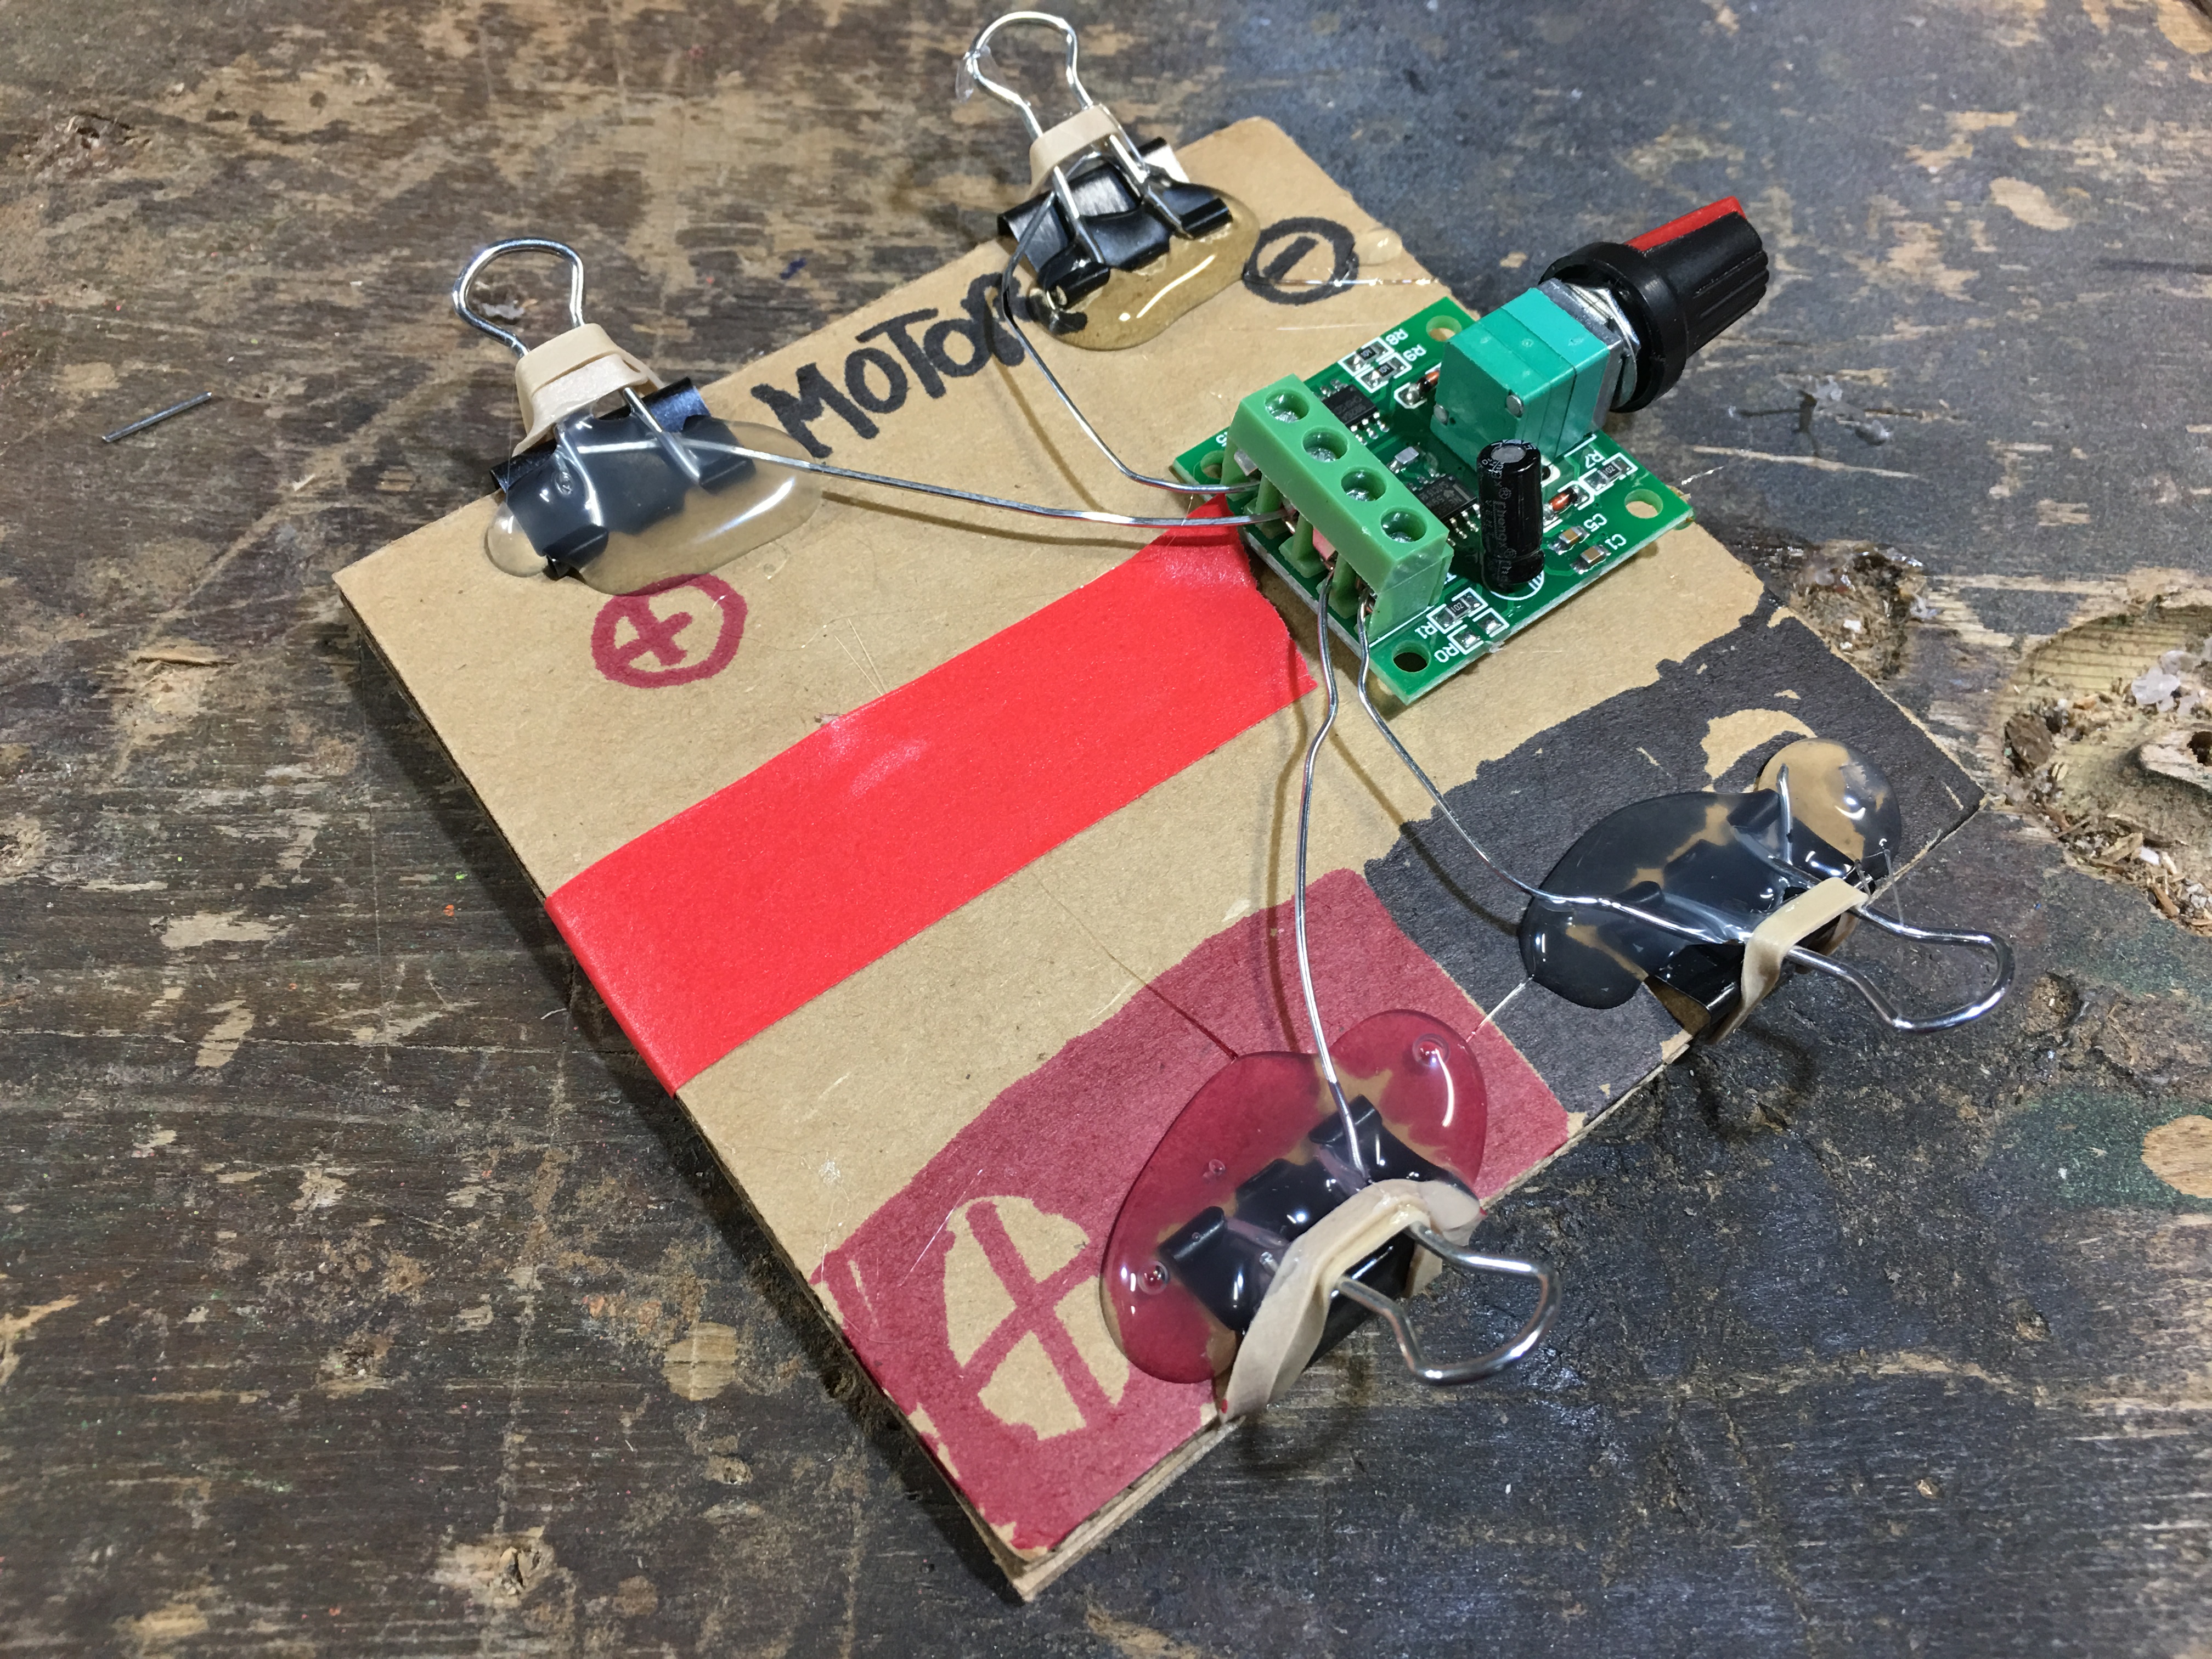 A motor speed controller module